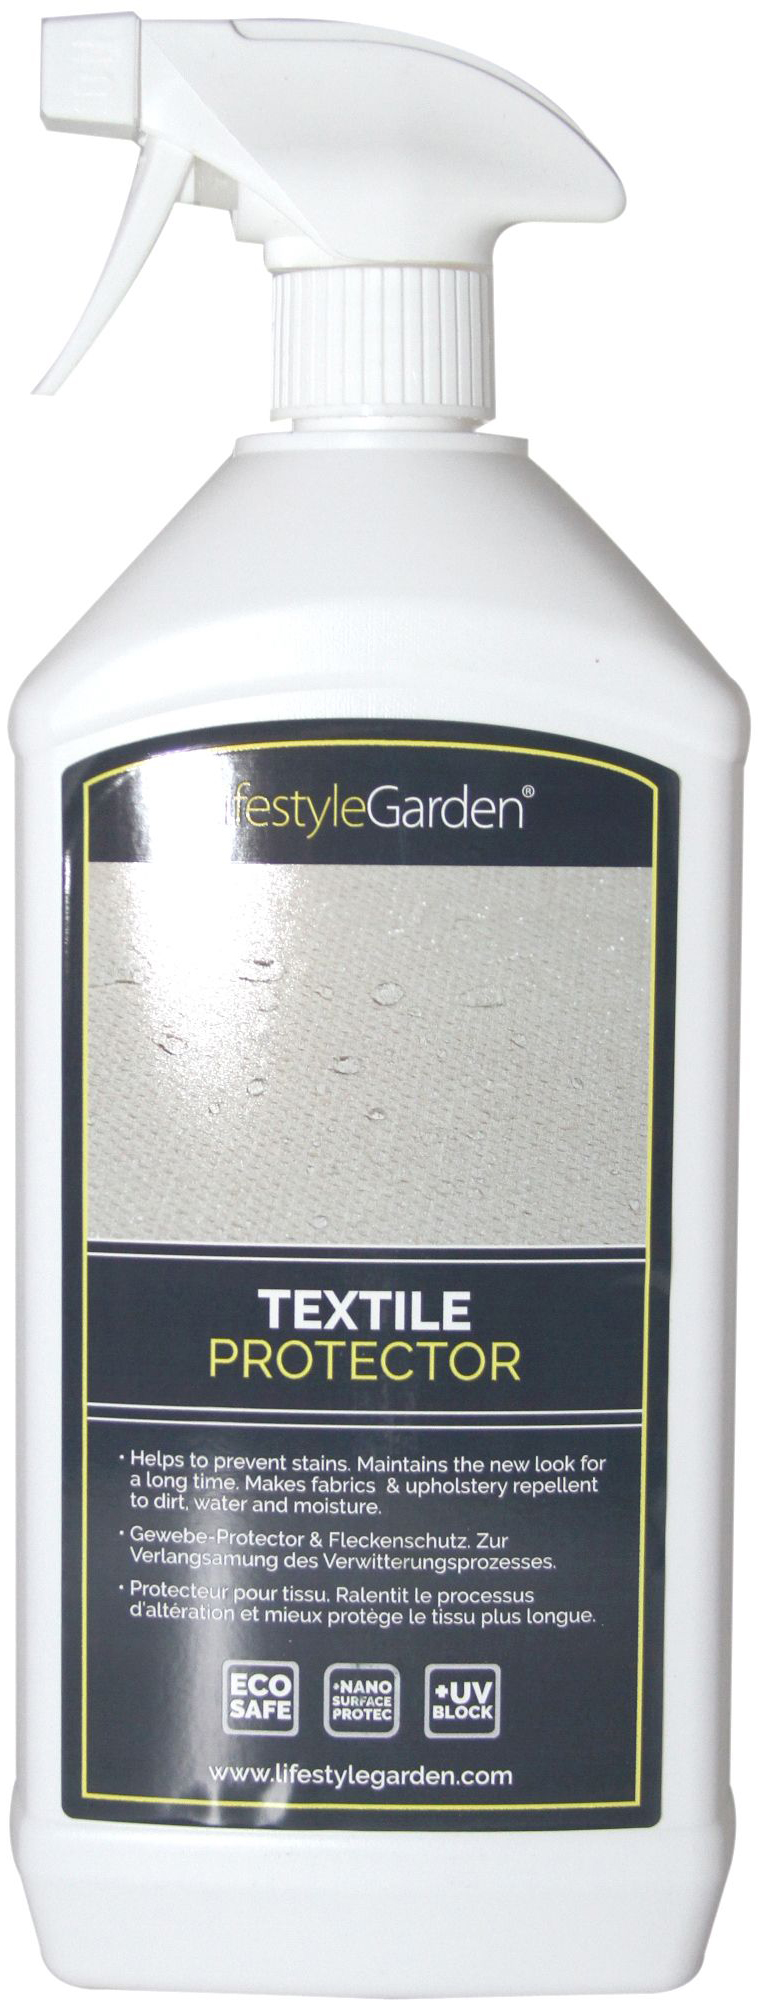 LifestyleGarden Textile Protector – 1 Litre